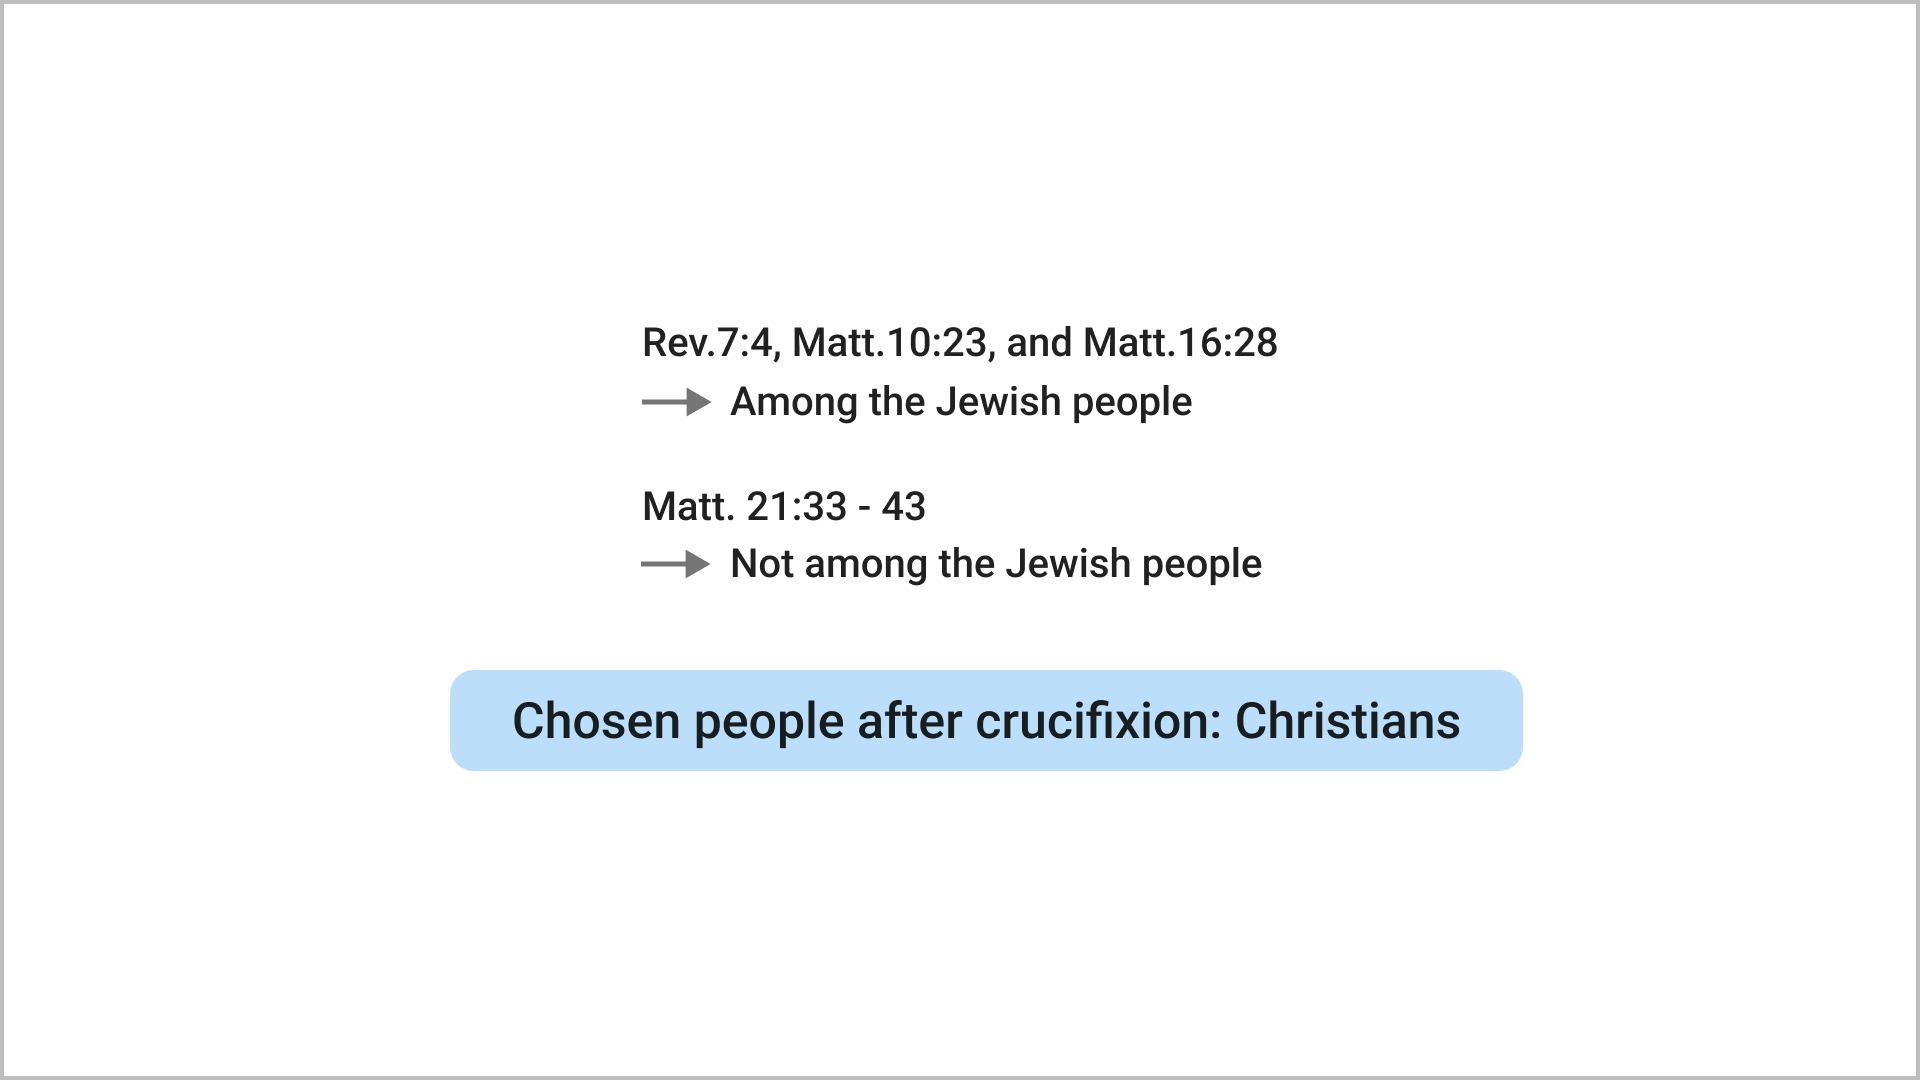 Will Christ Return among the Jewish People?